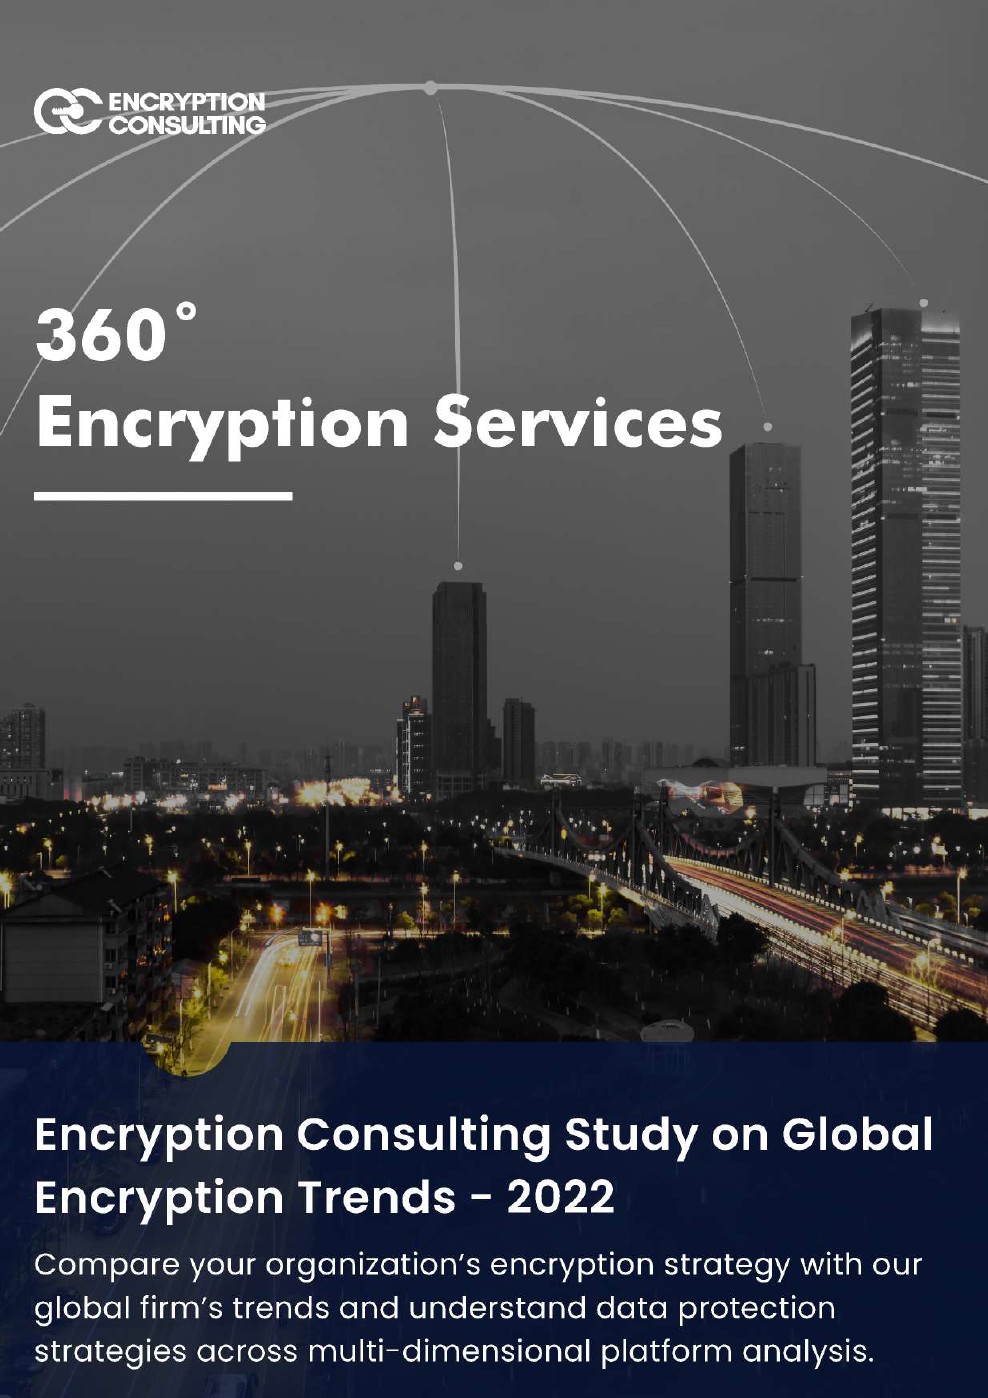 受访者：Encryption Consulting2022年全球加密趋势研究报告